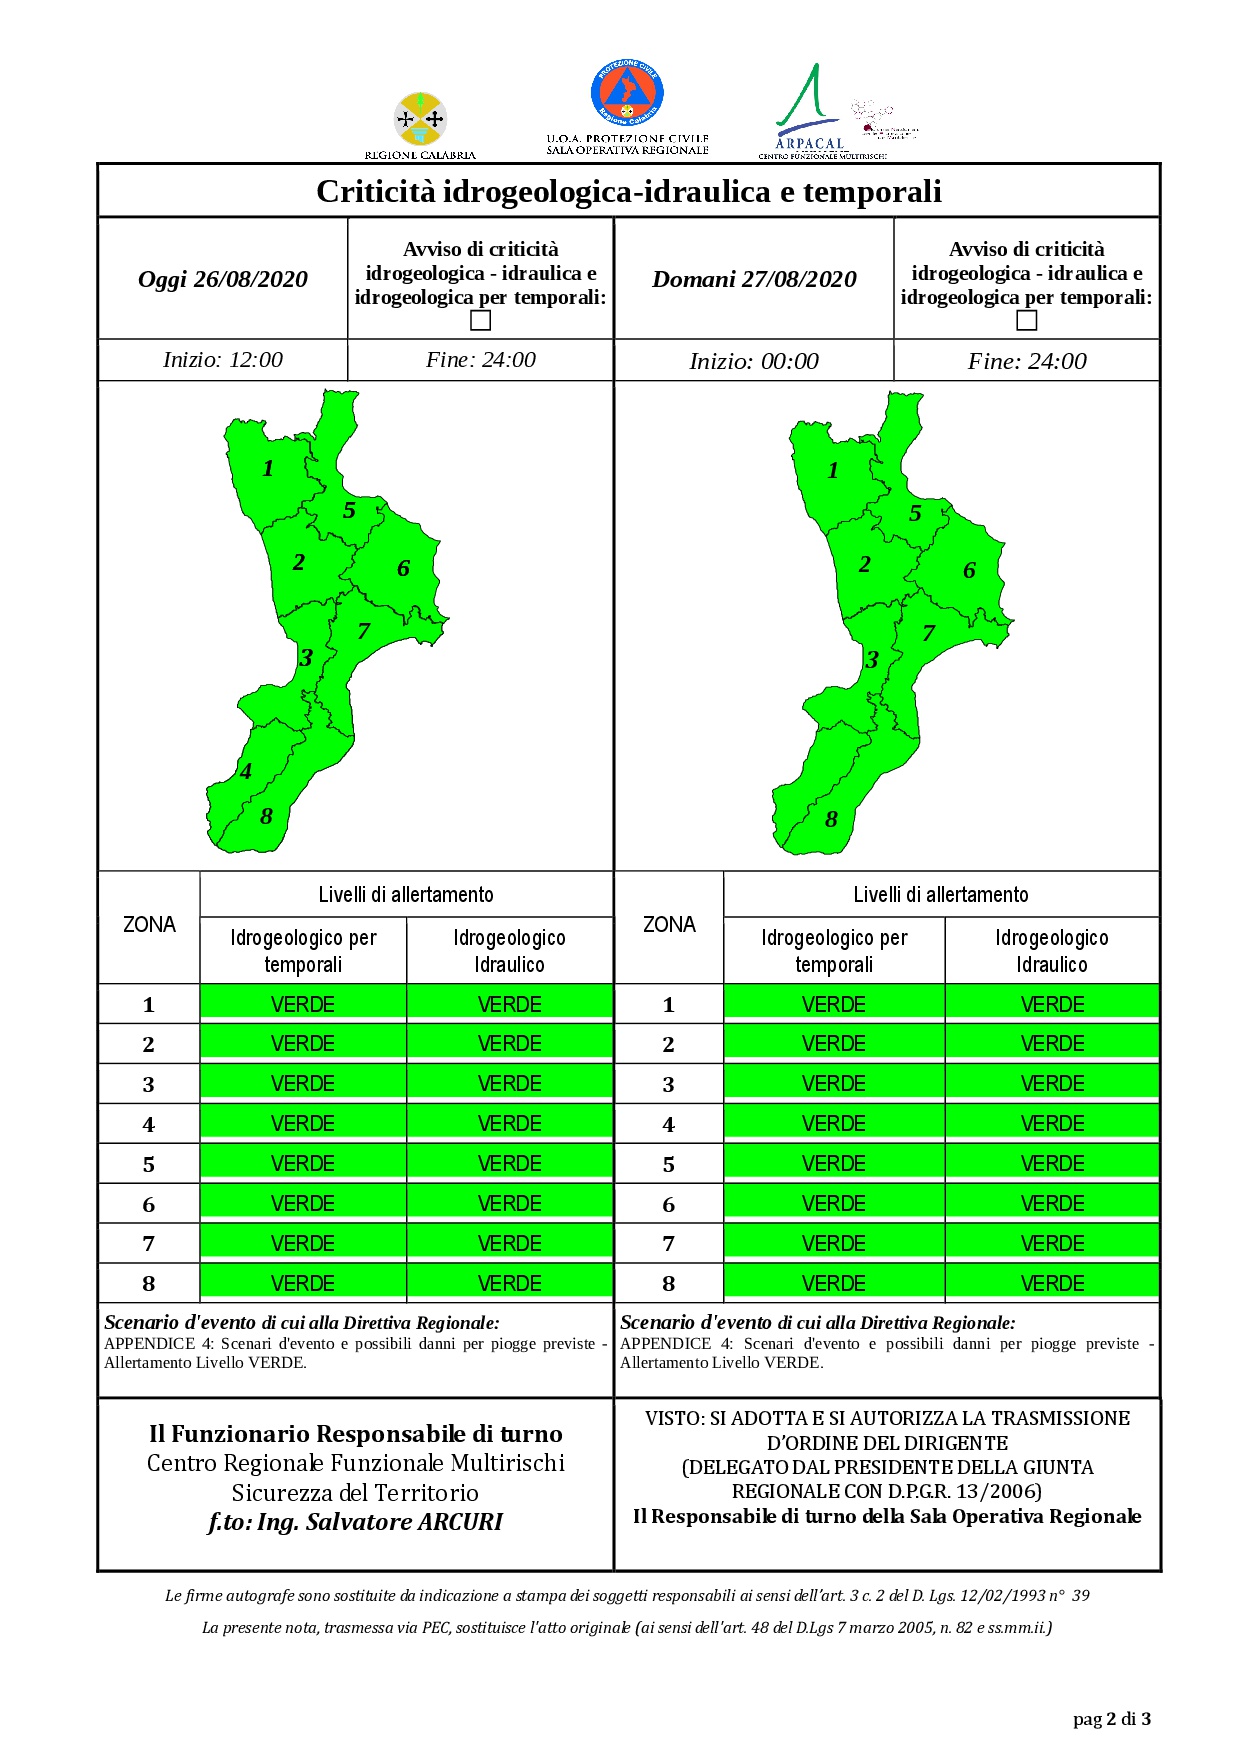 Criticità idrogeologica-idraulica e temporali in Calabria 26-08-2020